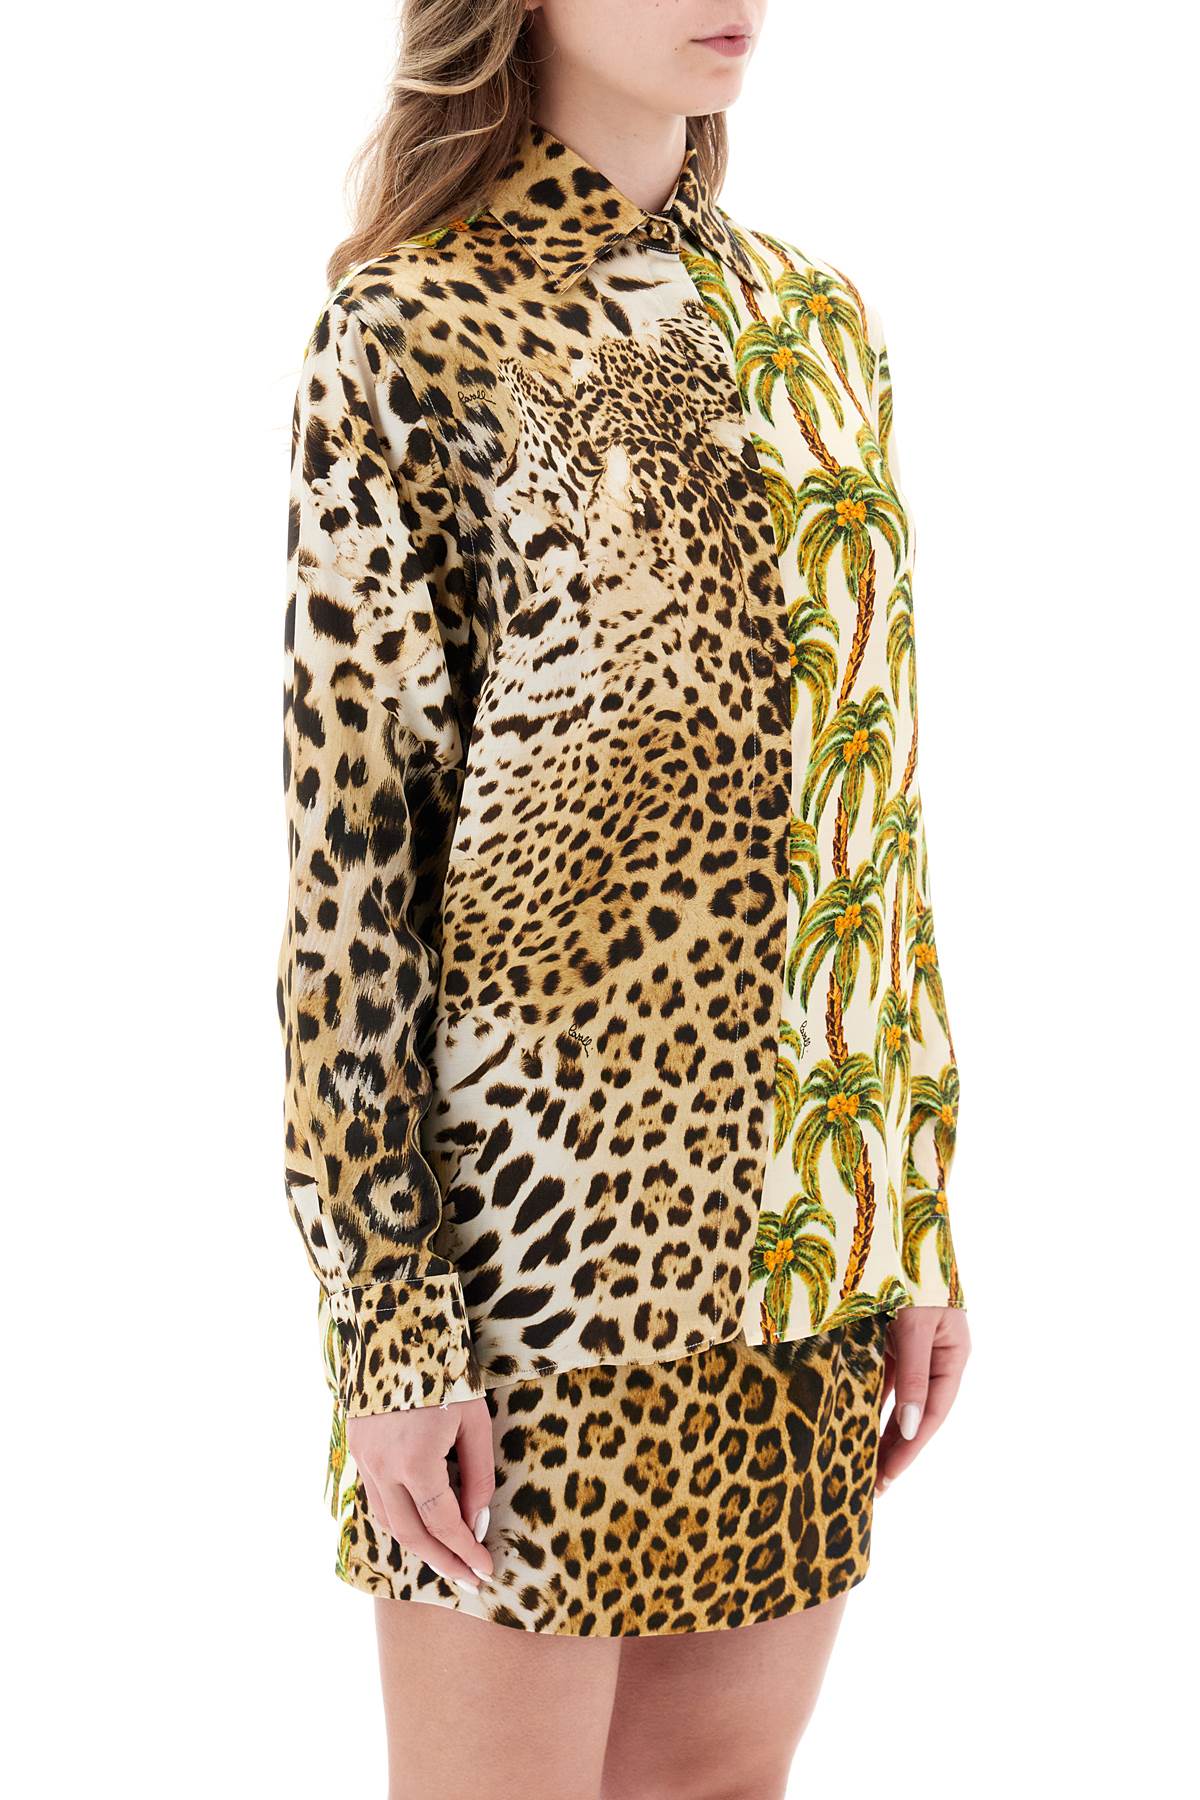 Roberto cavalli jaguar and palm tree printed shirt-1